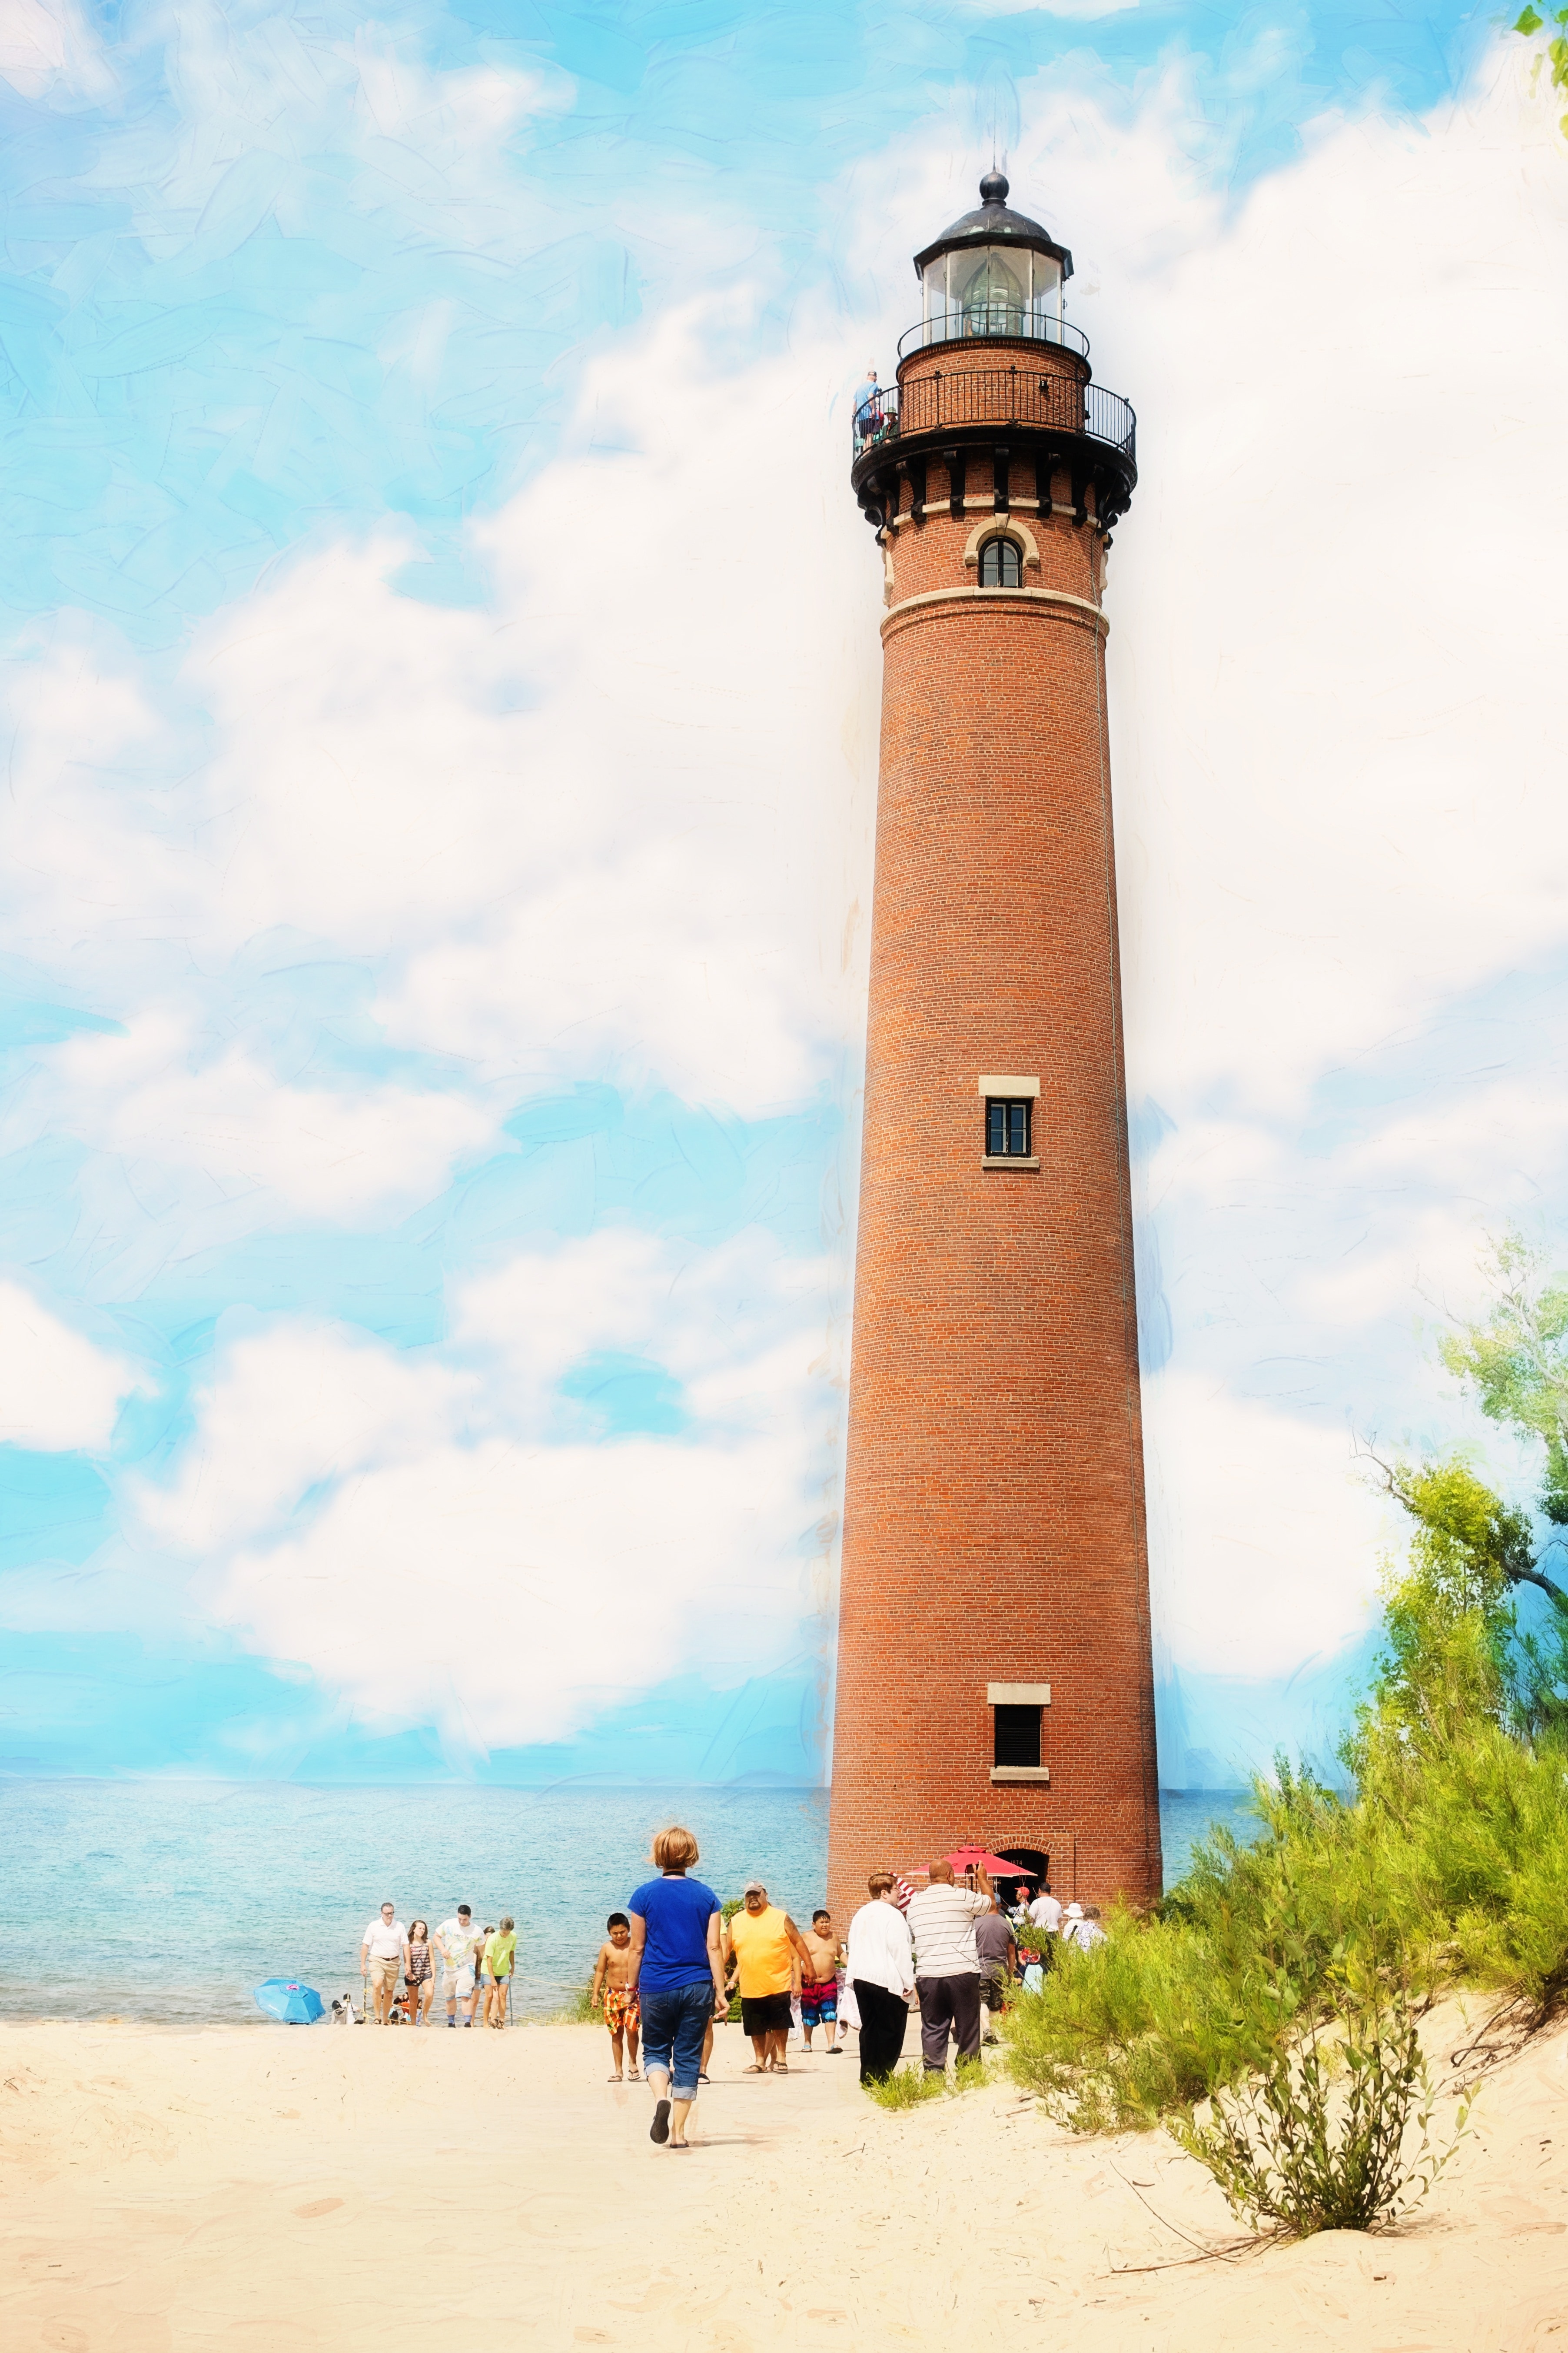 Michigan Lighthouse, Red Brick, Summer, lighthouse, cloud - sky